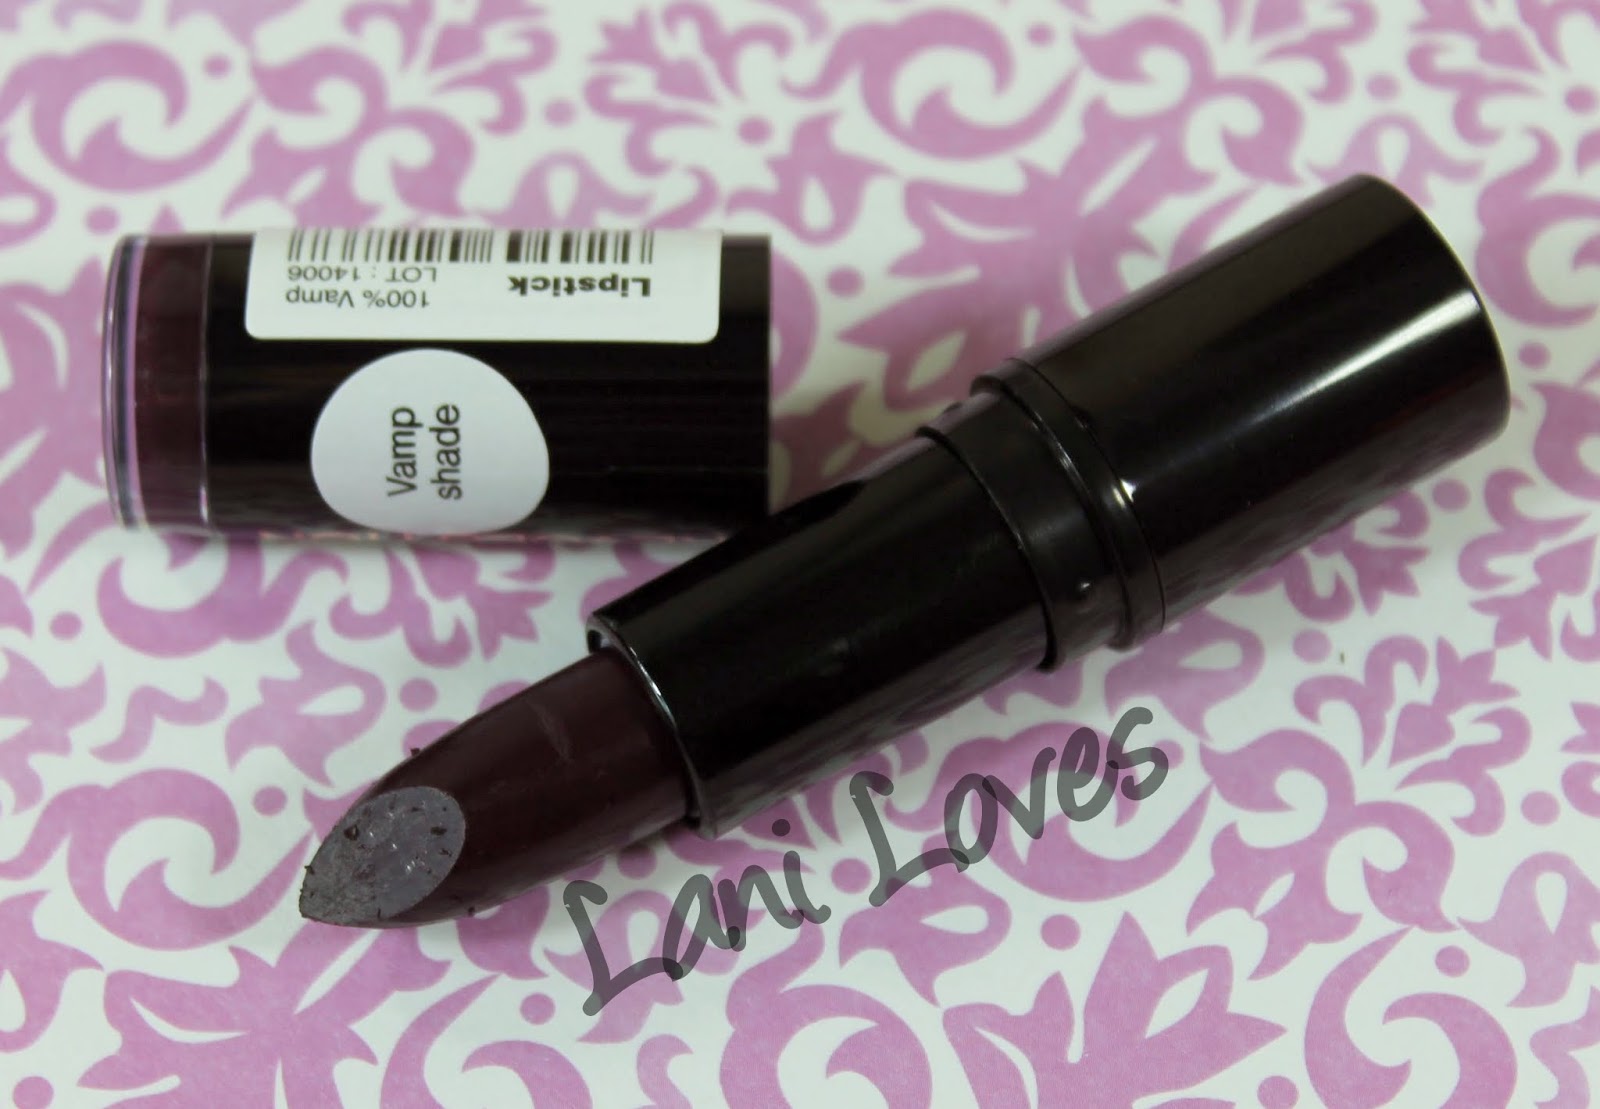 Makeup Revolution Amazing Lipstick - 100% Vamp Swatches & Review